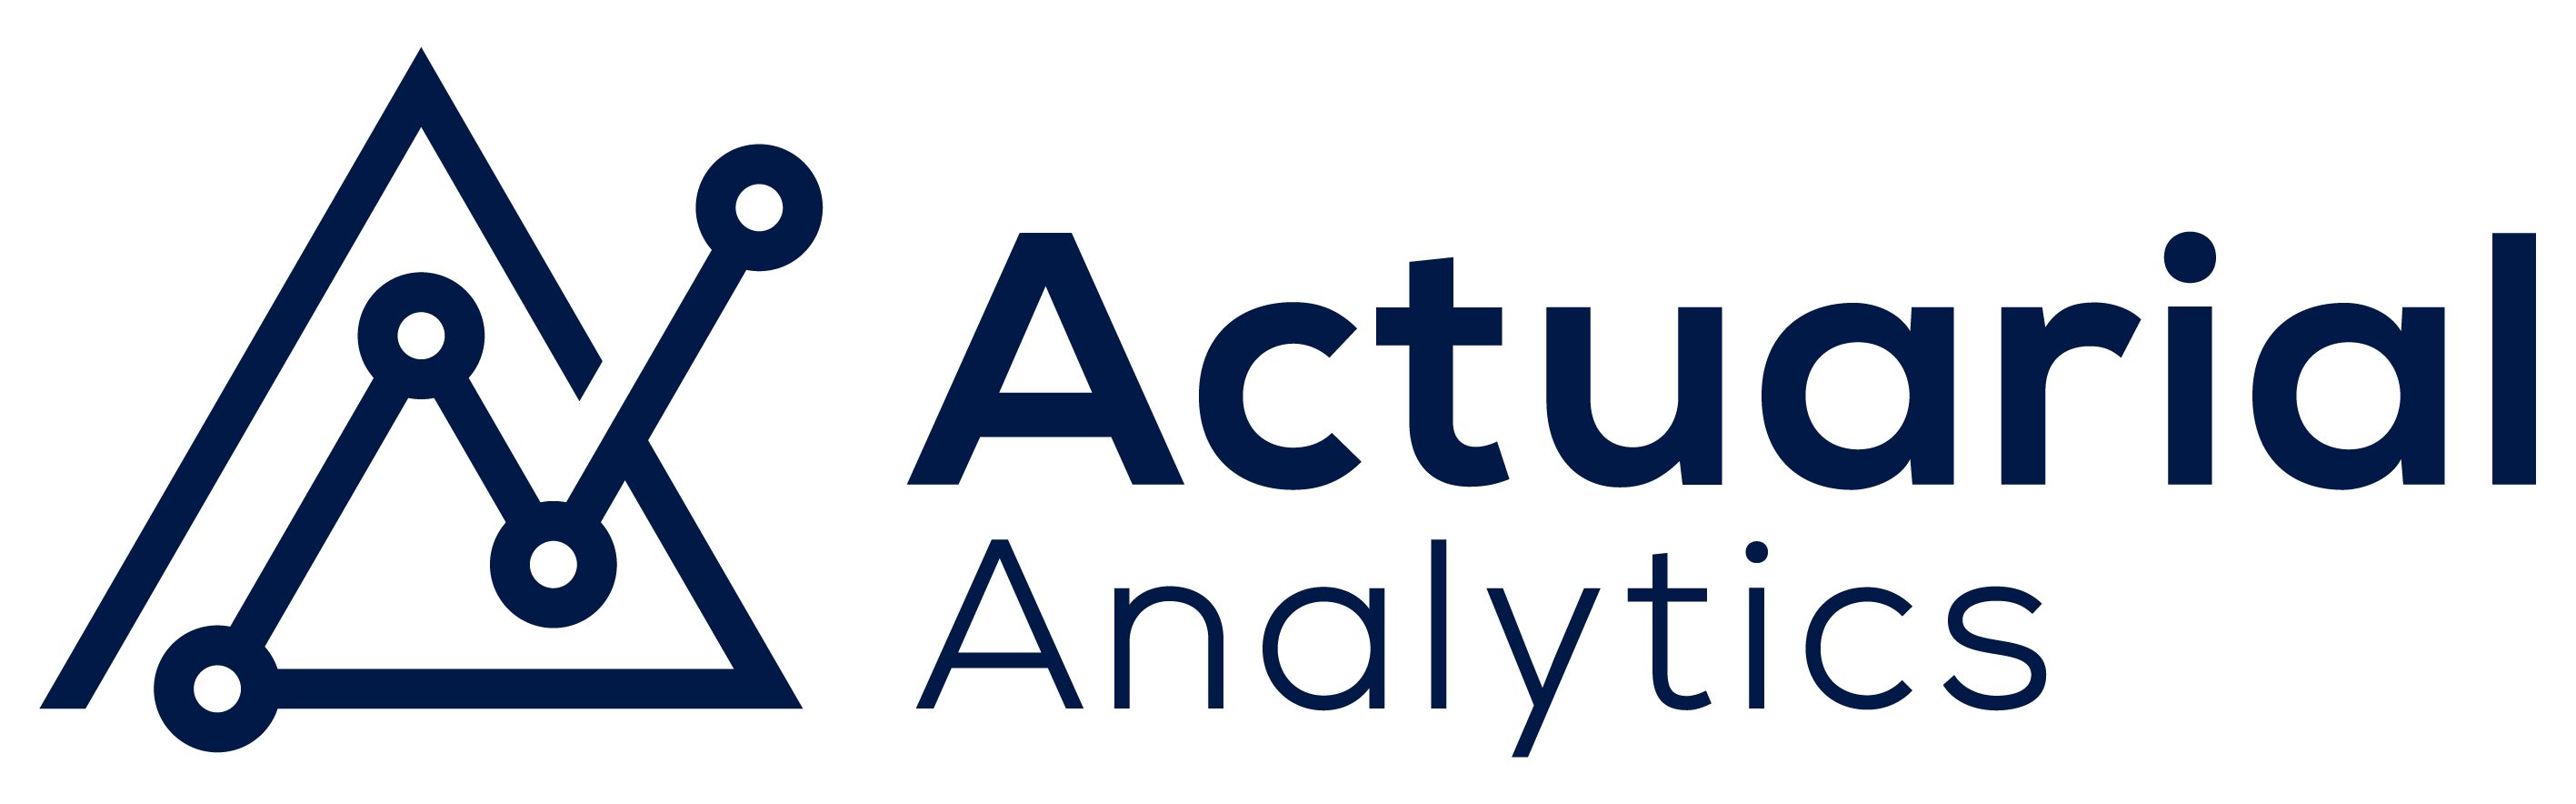 Actuarial Analytics